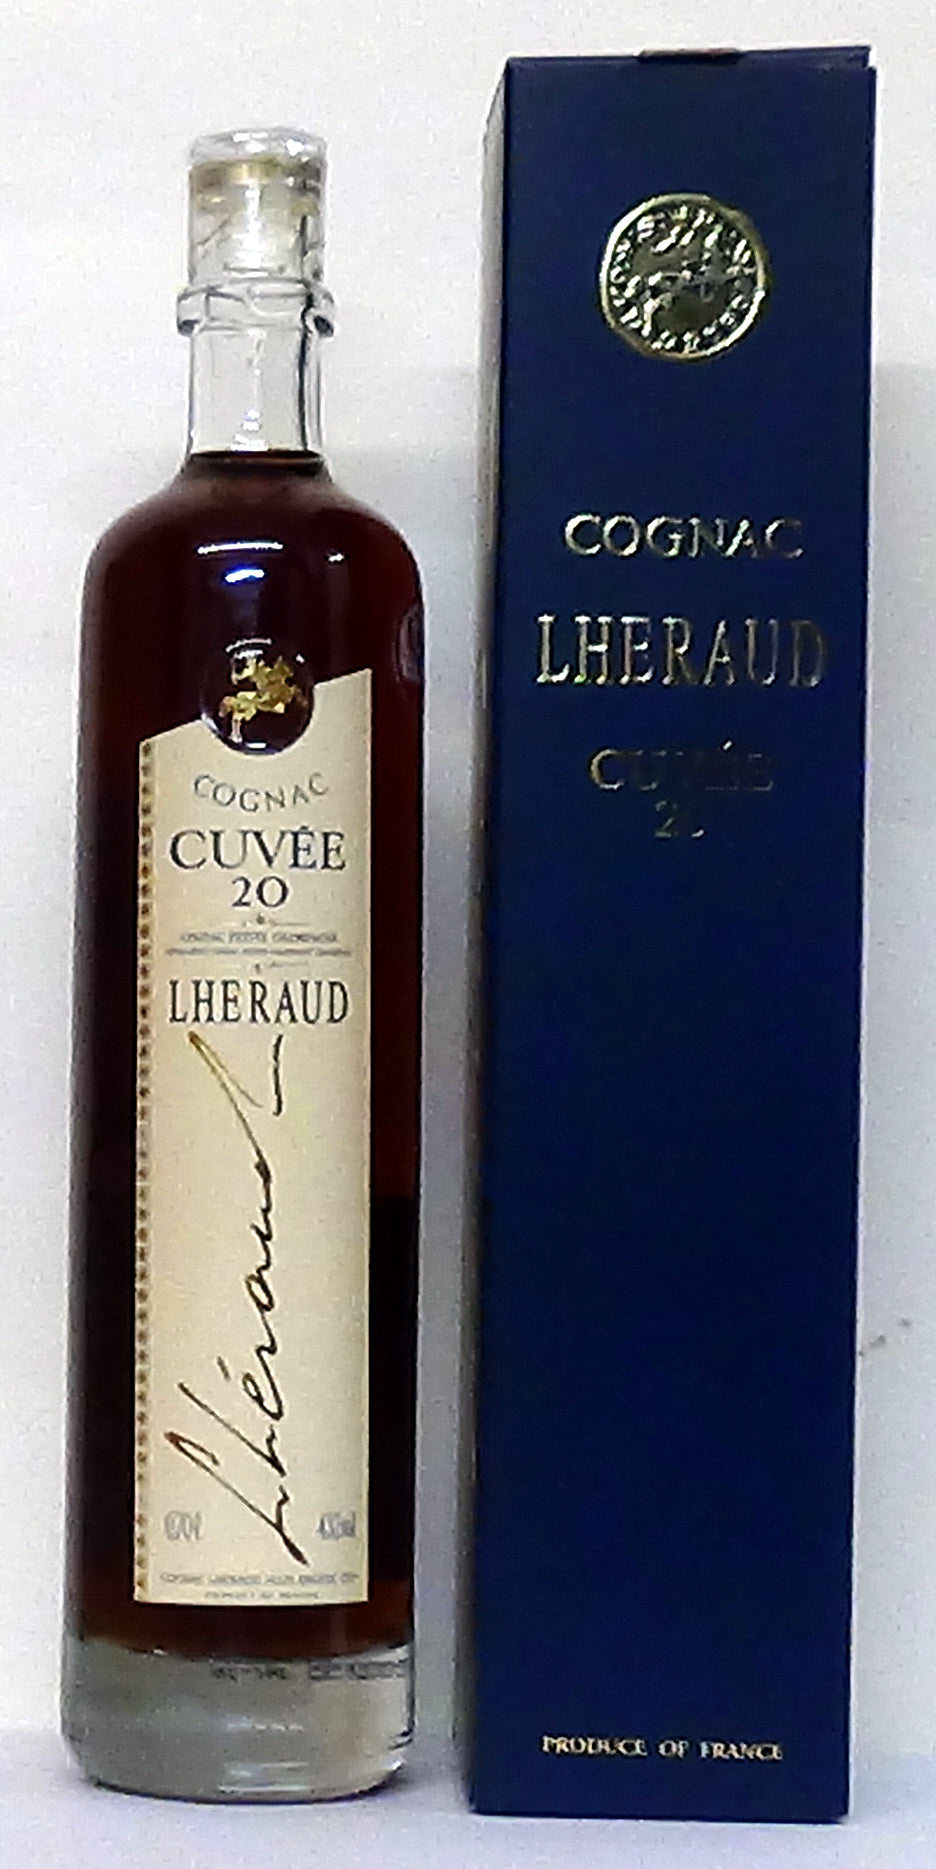 Lheraud Cuvee 20 Cognac 43% abv Petite Champagne Cognac